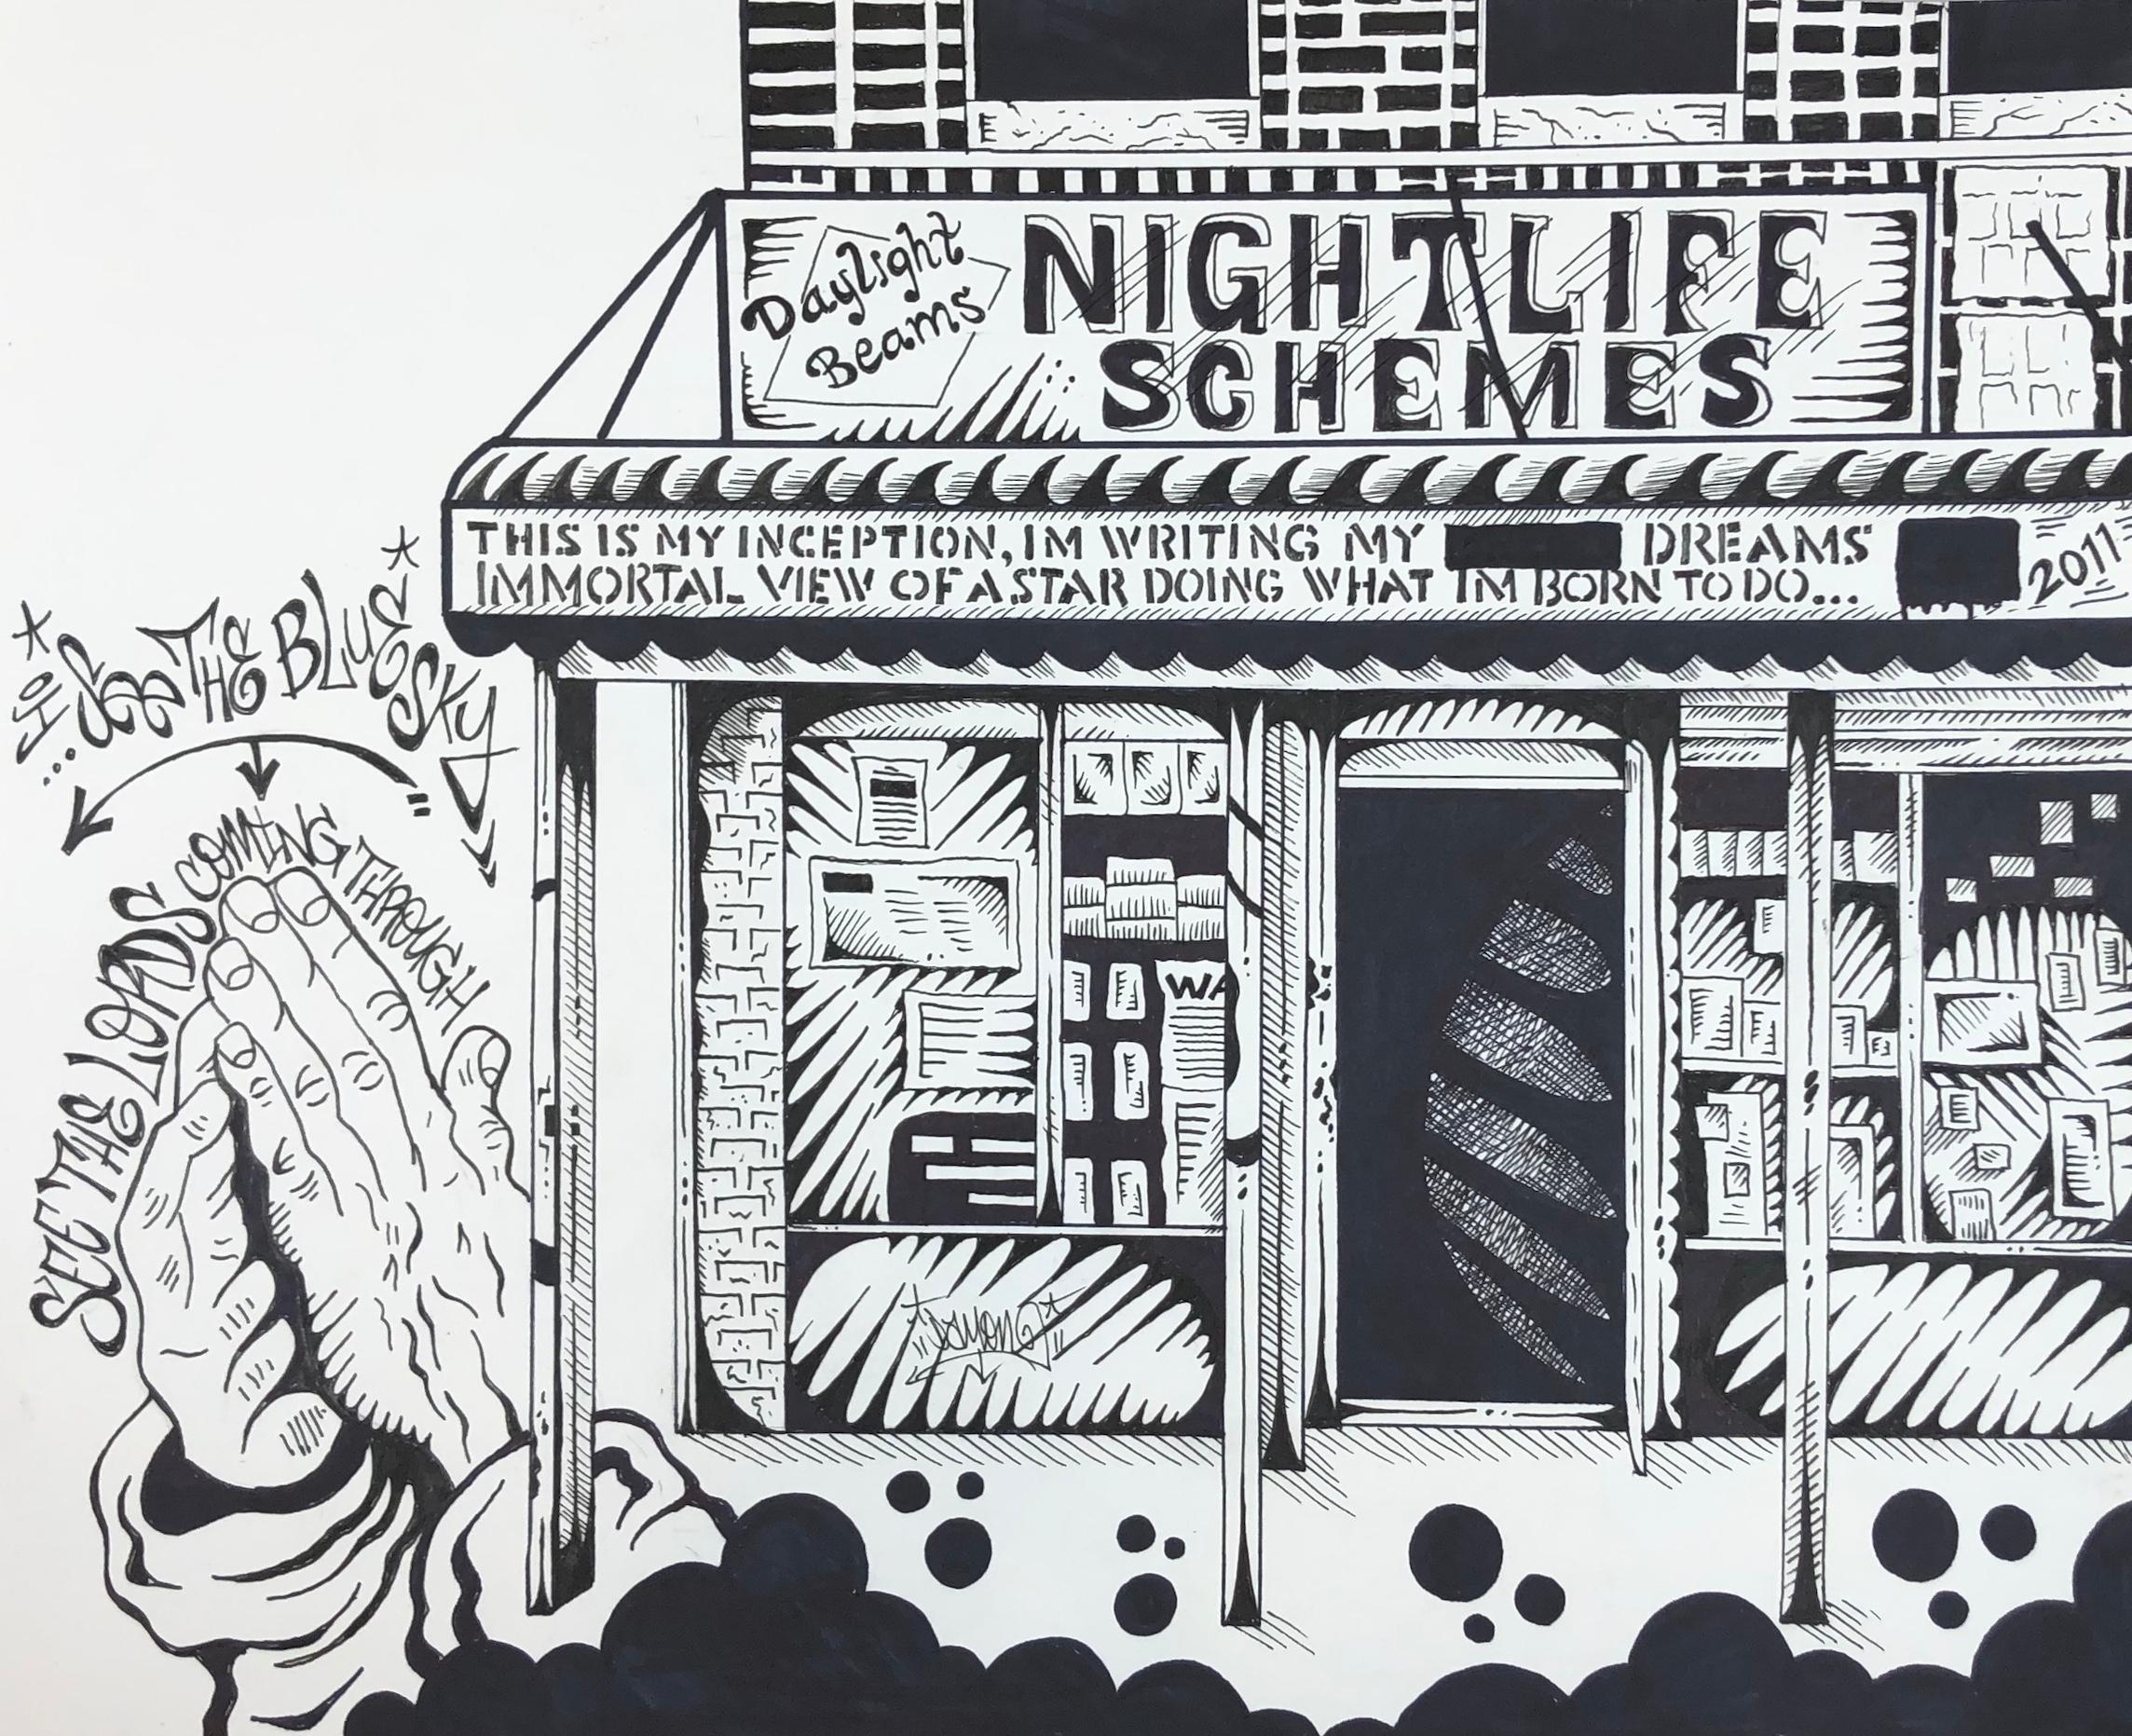 Nightlife Schemes - Art by Damon Johnson